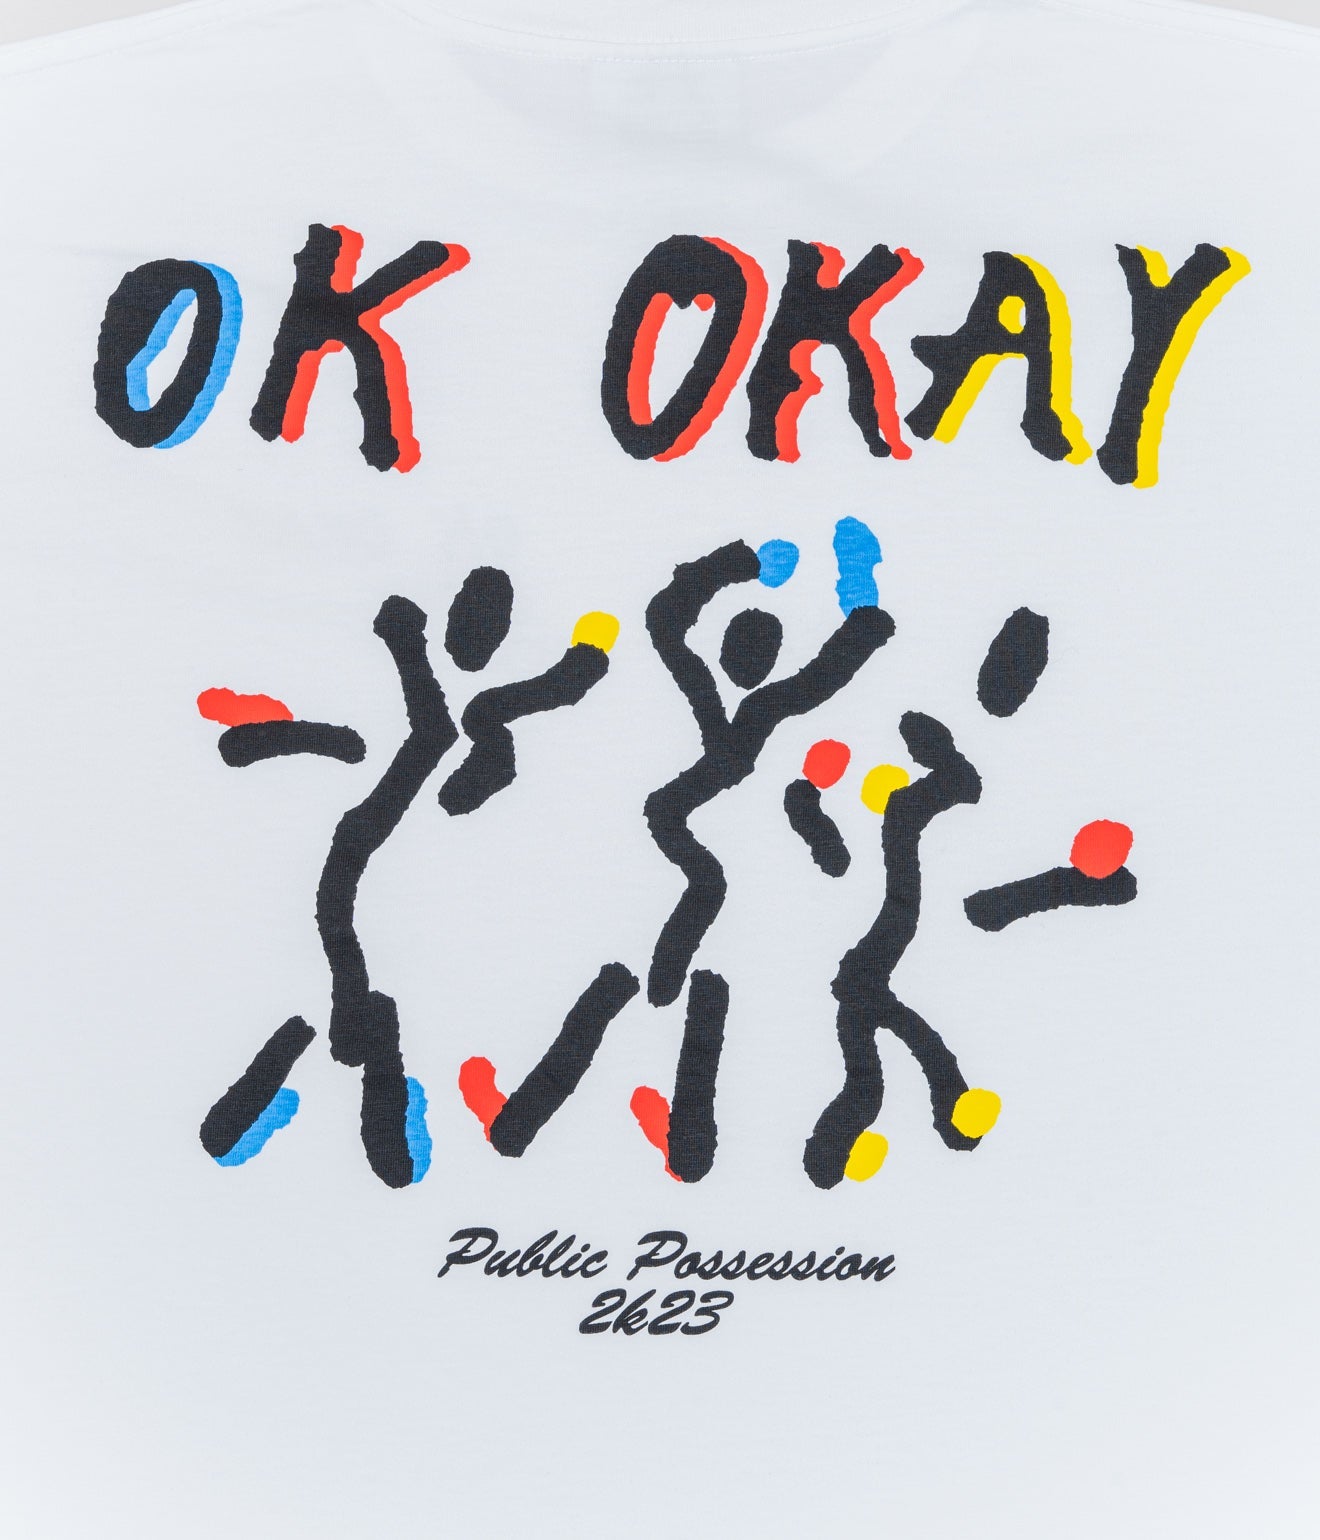 Public Possession ""OK OKAY" T-Shirt - WEAREALLANIMALS